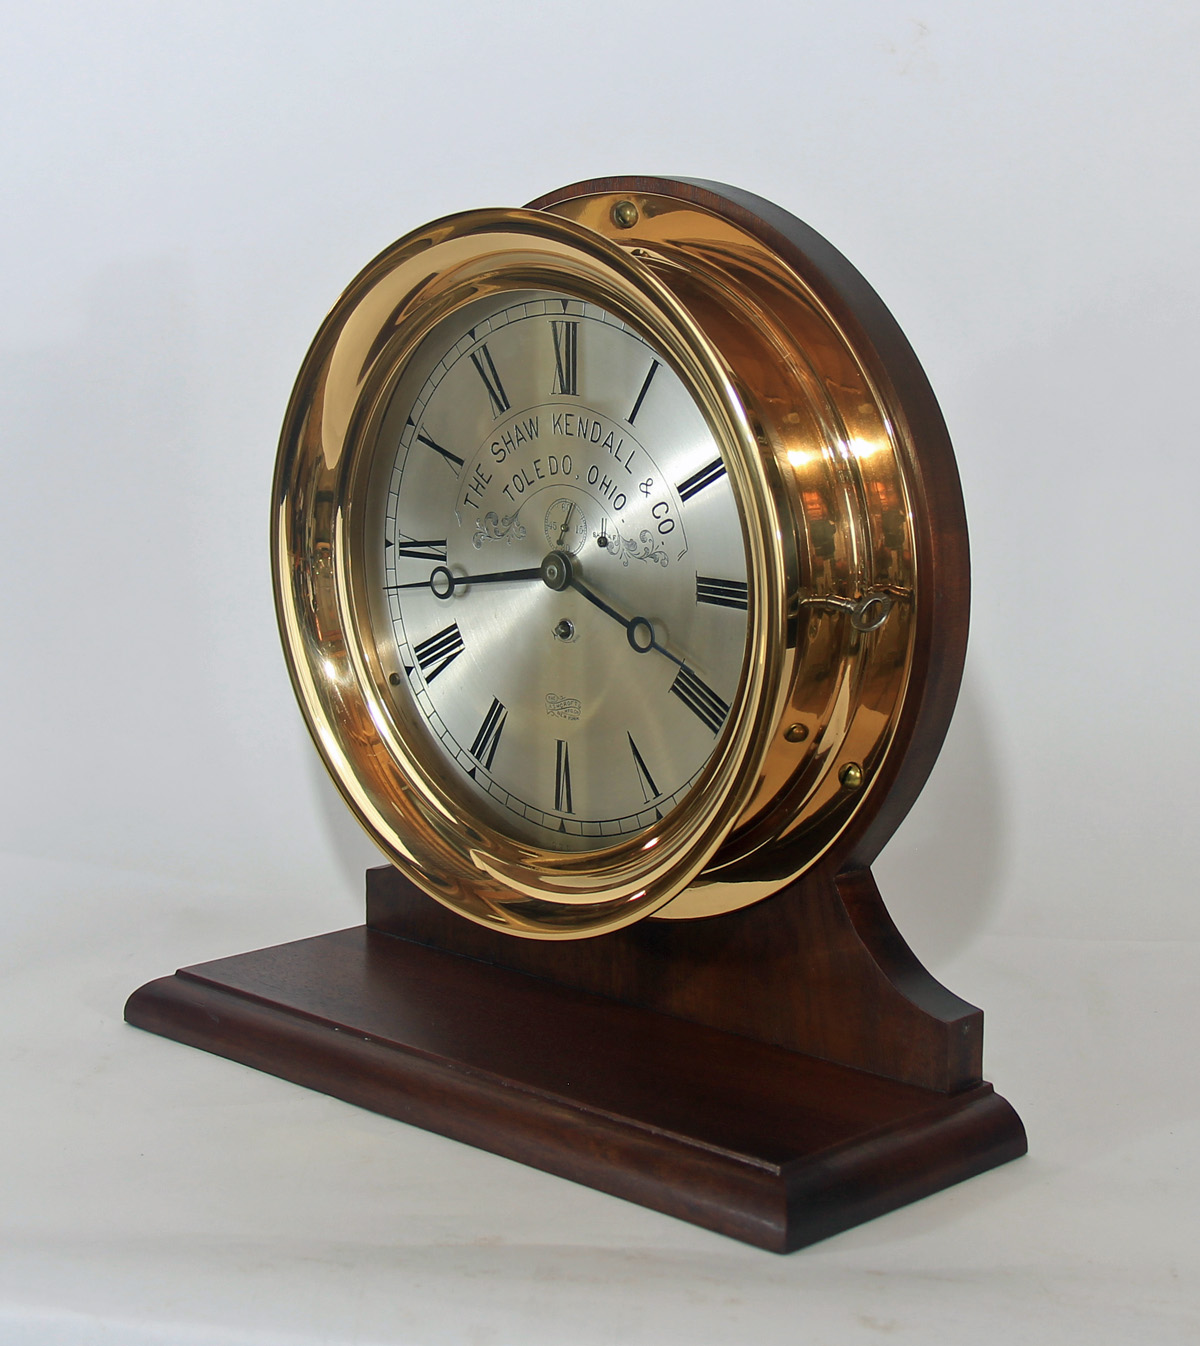 Eastman Clock C o. 10" Marine Clock for Shaw Kendall & Co.